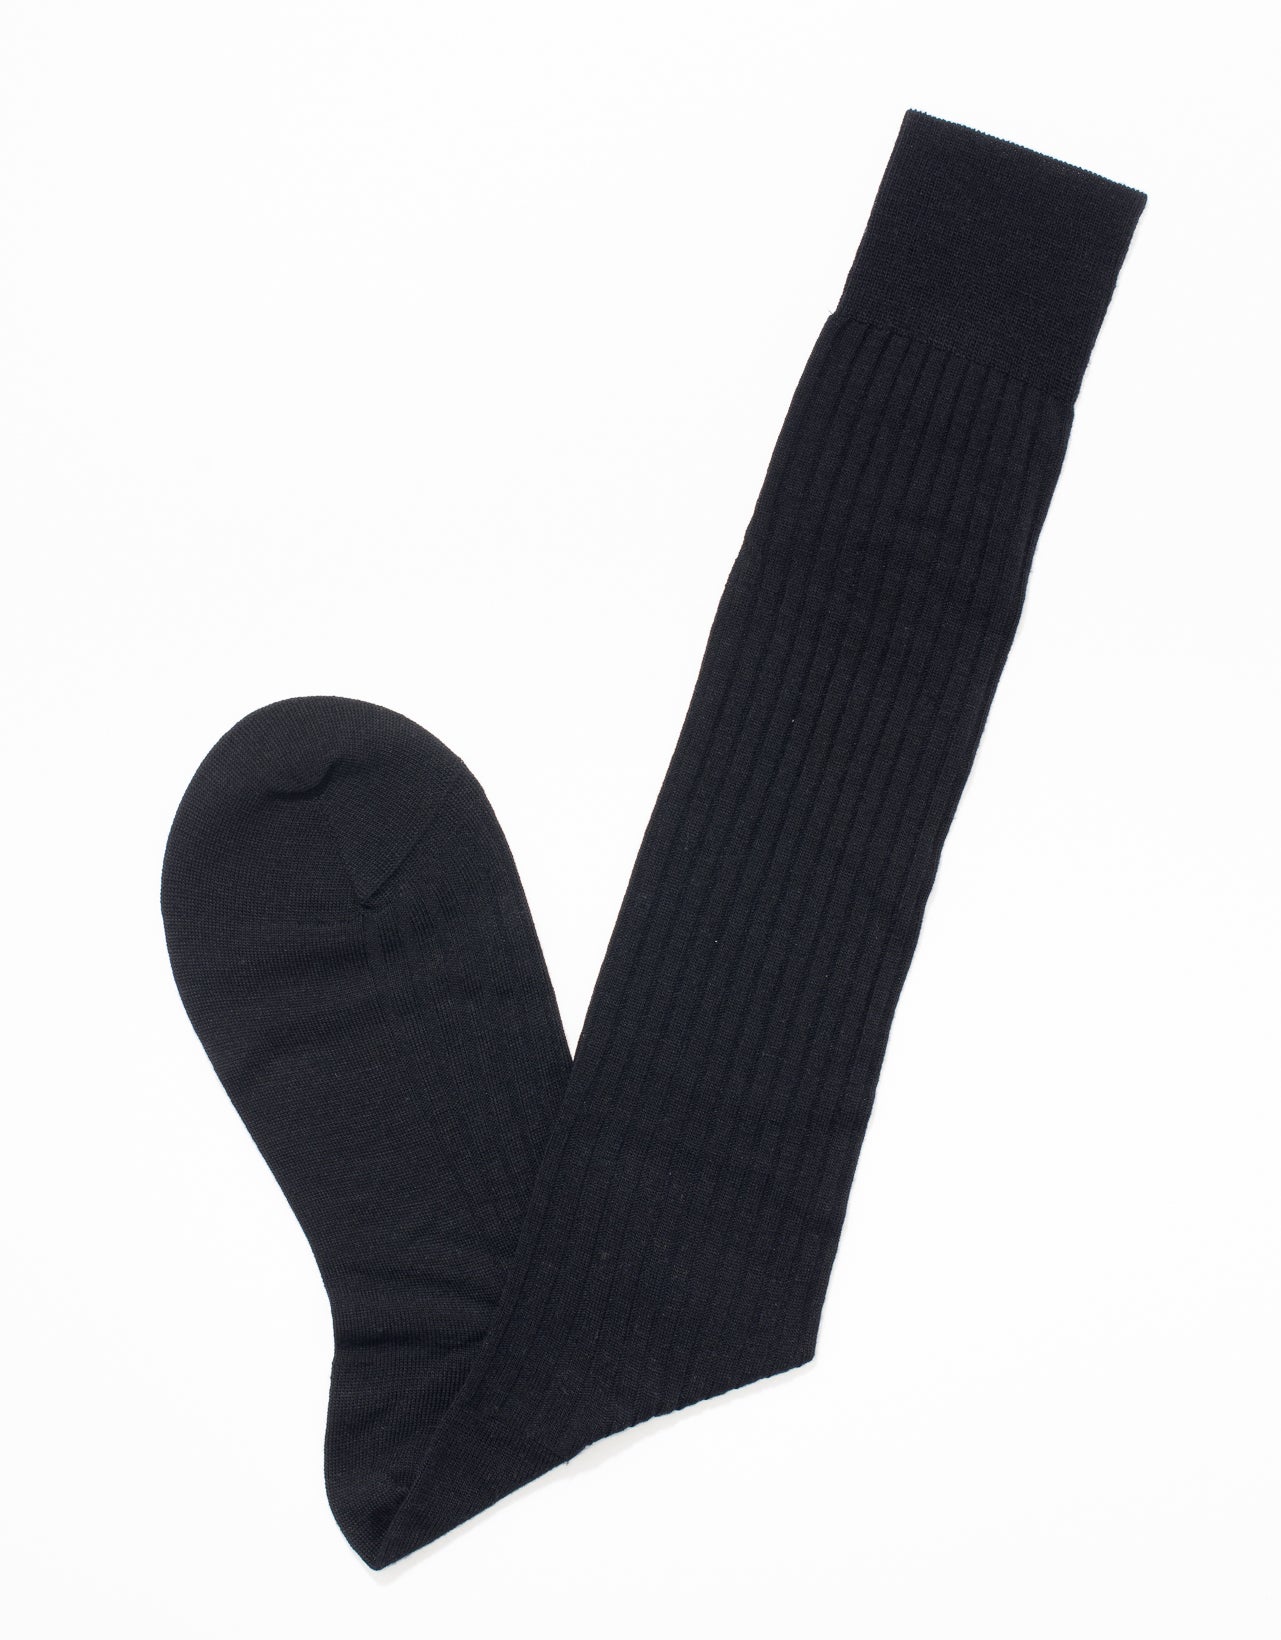 Black Over-Calf Hose Wool Socks | Men's Dress Socks - J. Press – J. PRESS